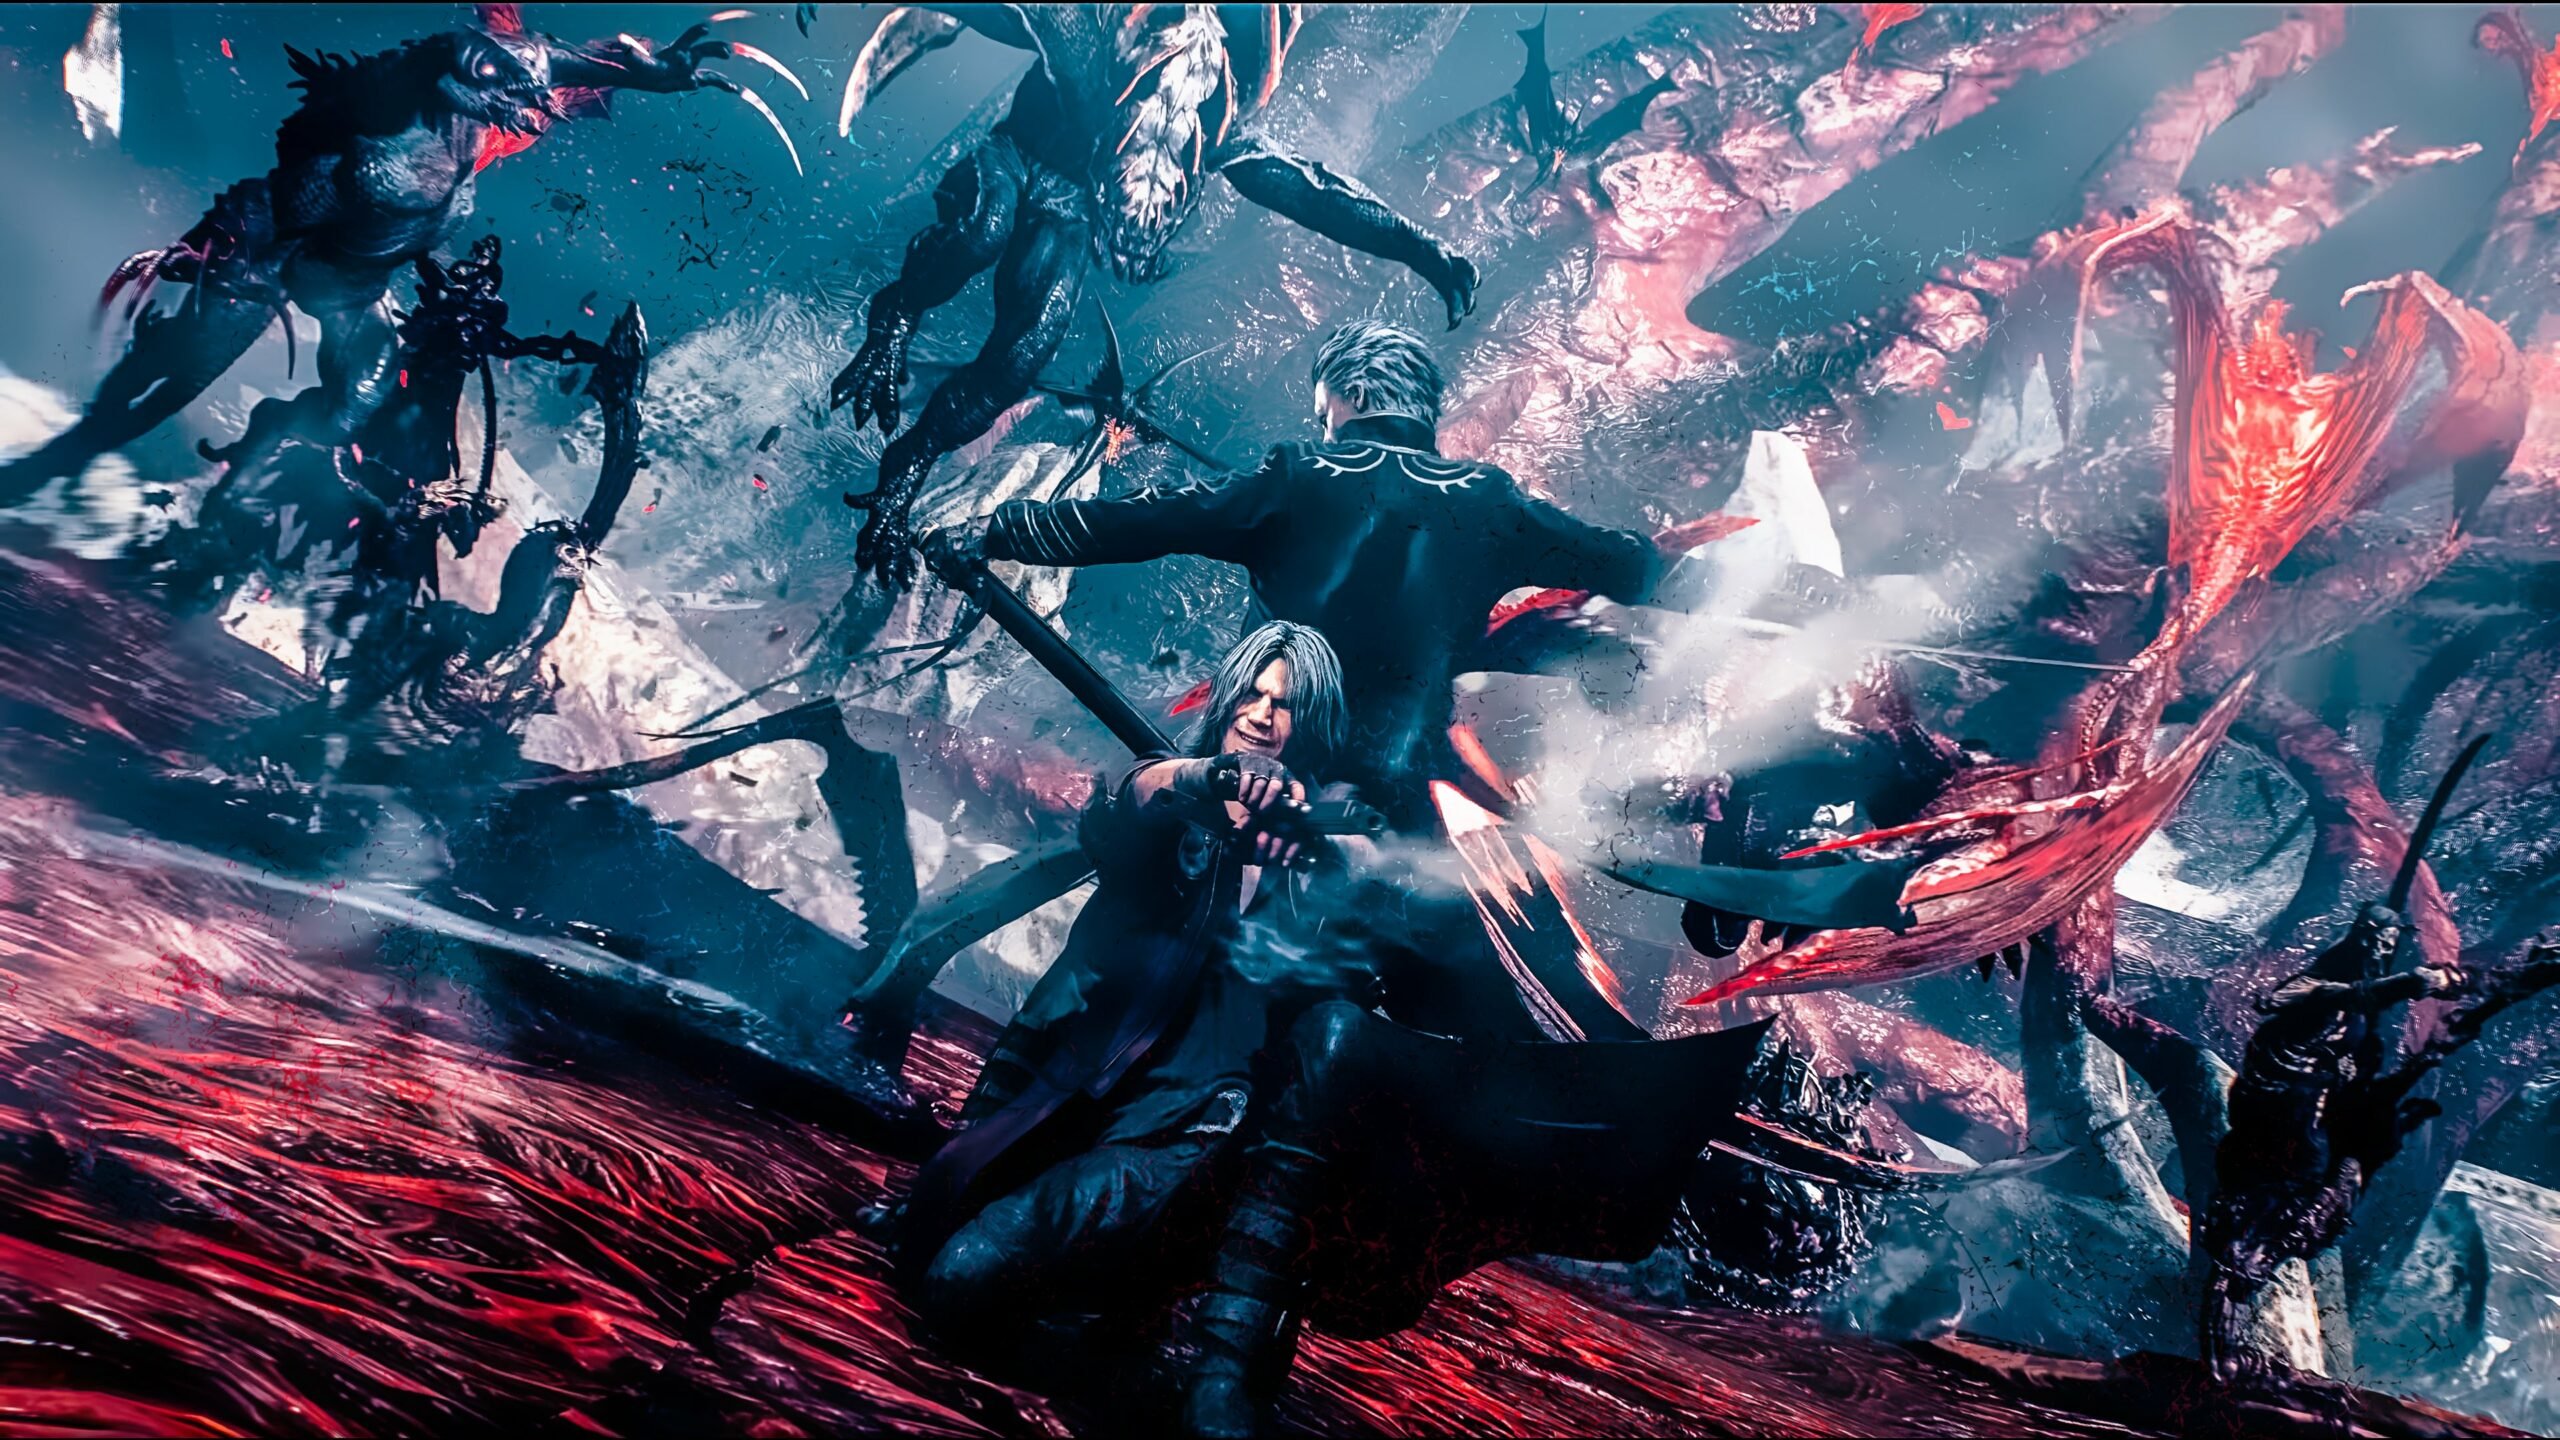 Stream Devil May Cry 5 Vergil Bury The Light, Dante Boss Battle OST by  SomeDERPYBOSS